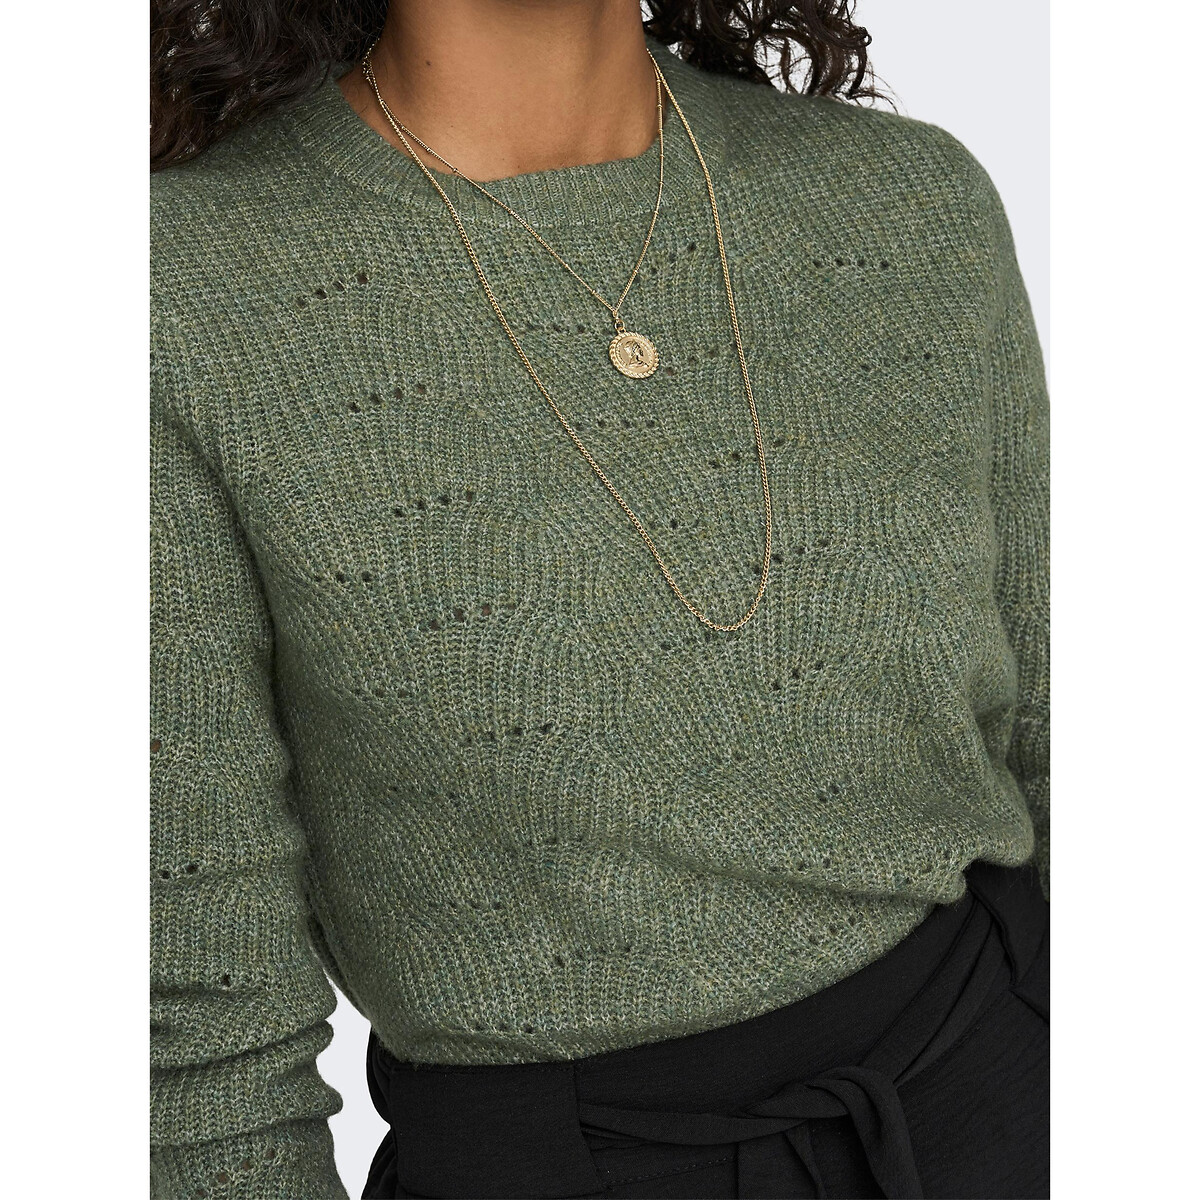 Пуловер ONLY Пуловер Из тонкого трикотажа XS зеленый, размер XS - фото 5